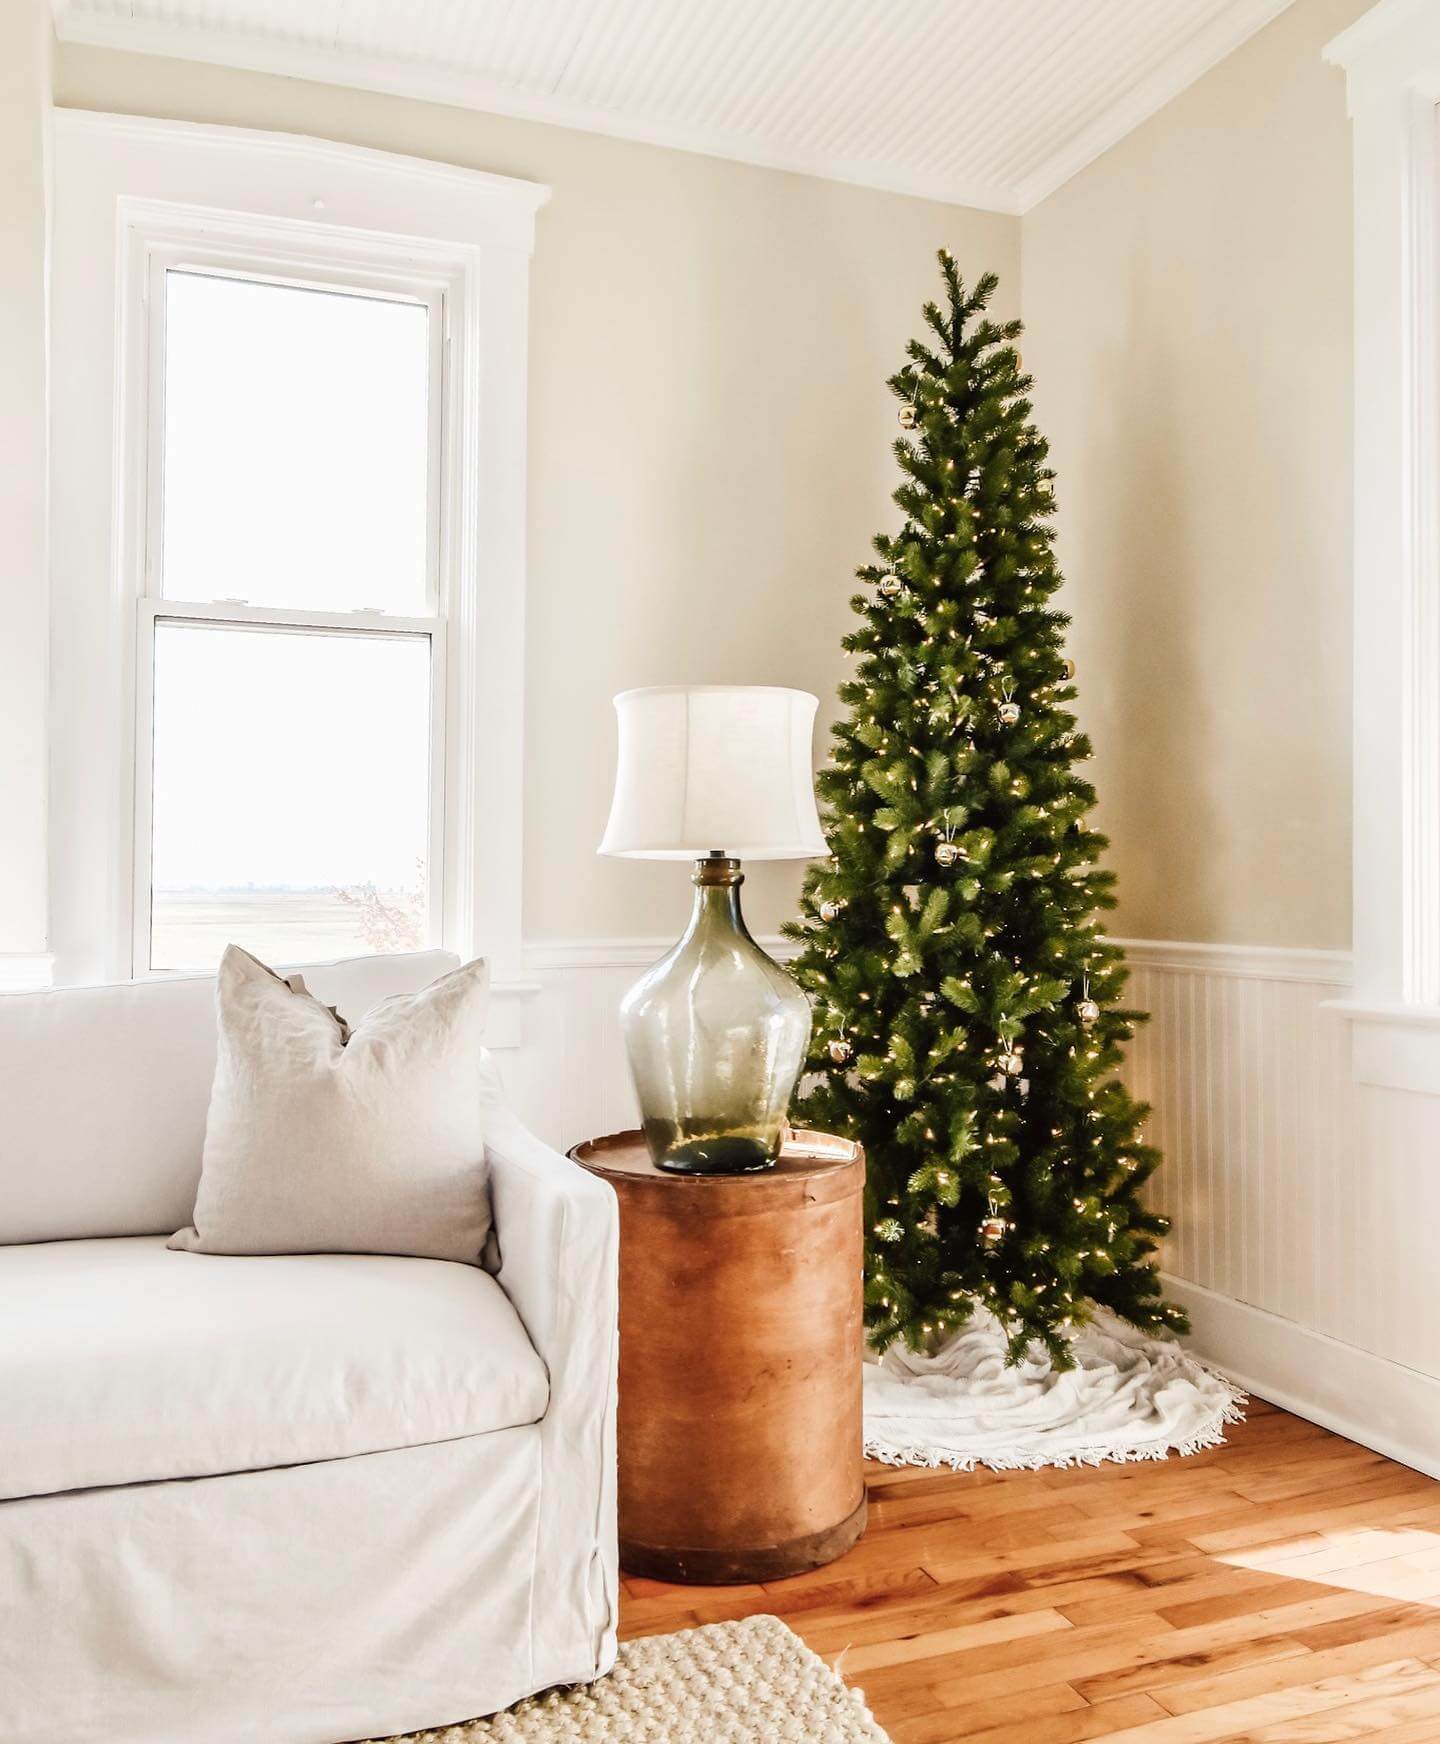 King of Christmas 9' King Douglas Fir Slim Quick-Shape Artificial Christmas Tree with 750 Warm White & Multi-Color LED Lights